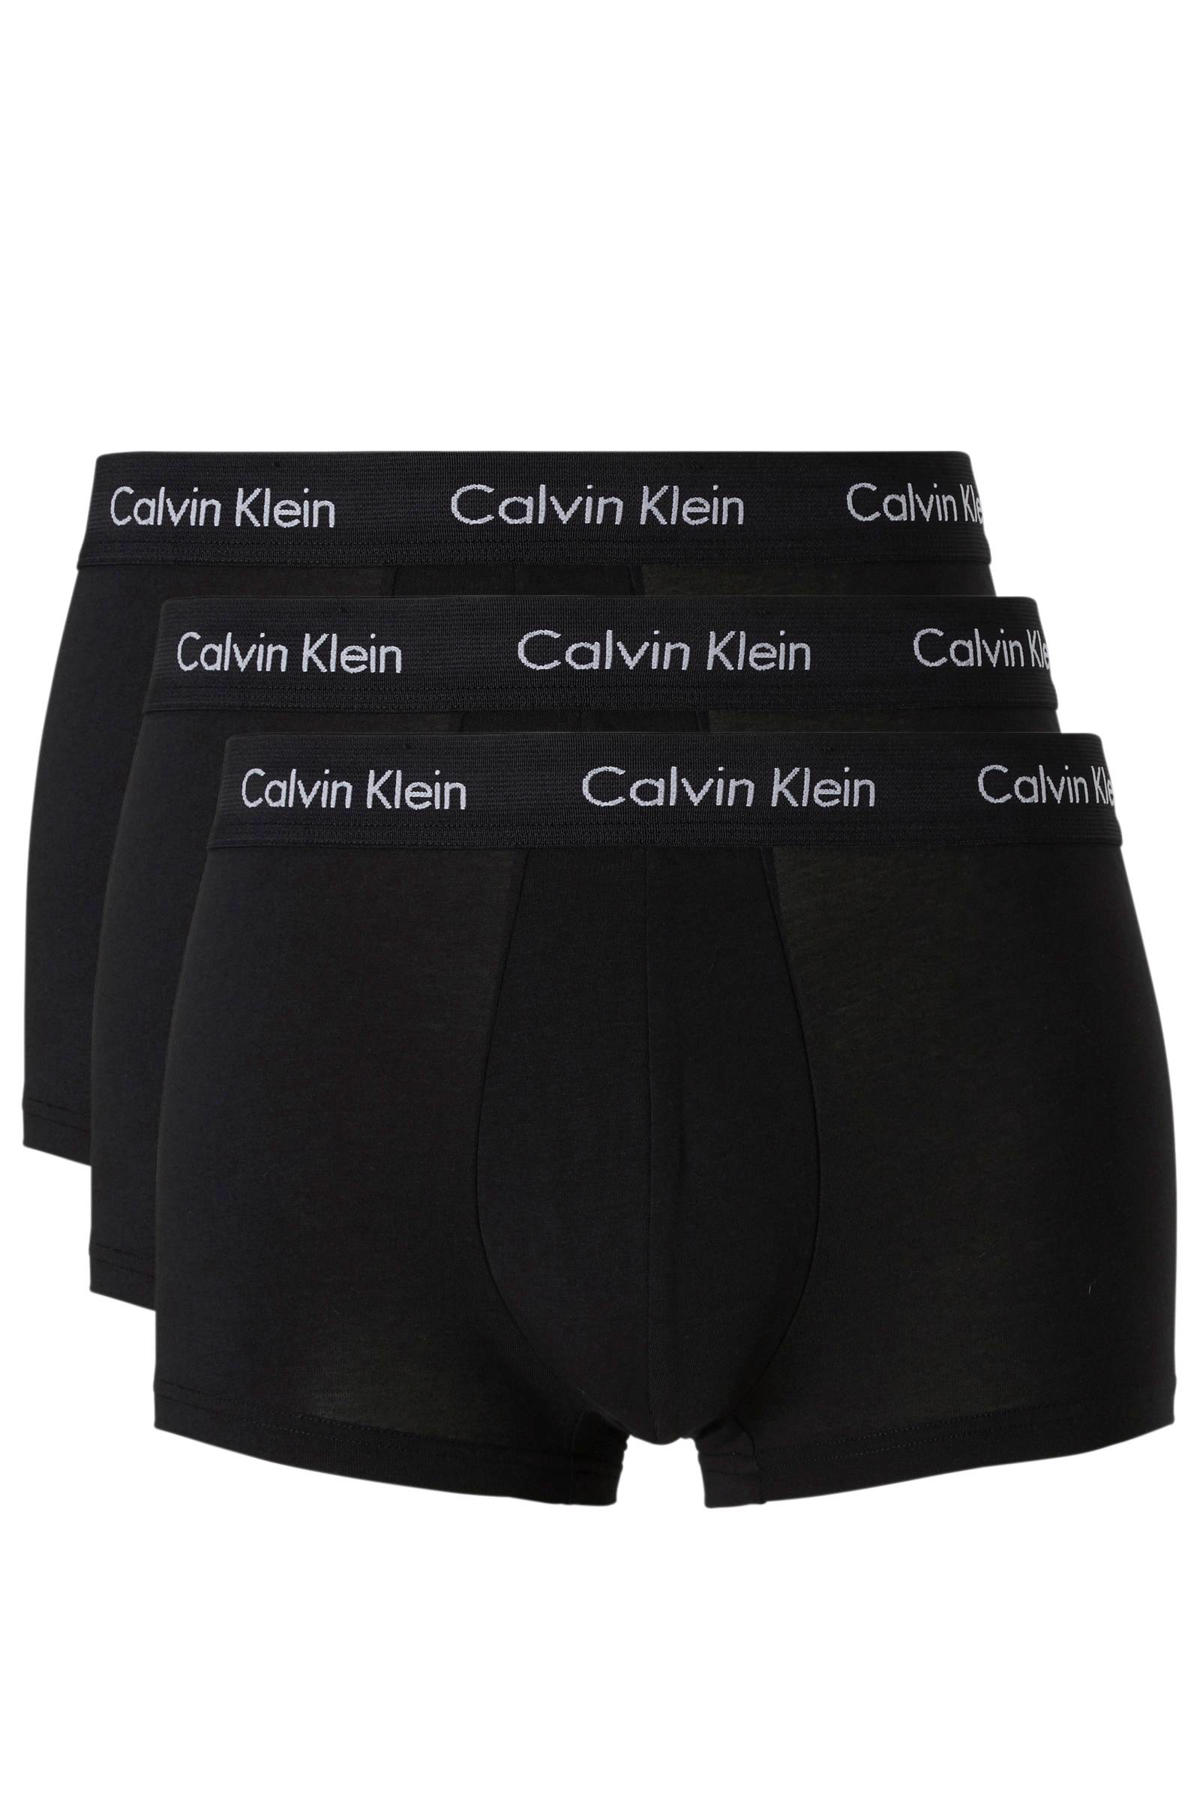 inspanning tussen Omgeving CALVIN KLEIN UNDERWEAR boxershort (set van 3) | wehkamp